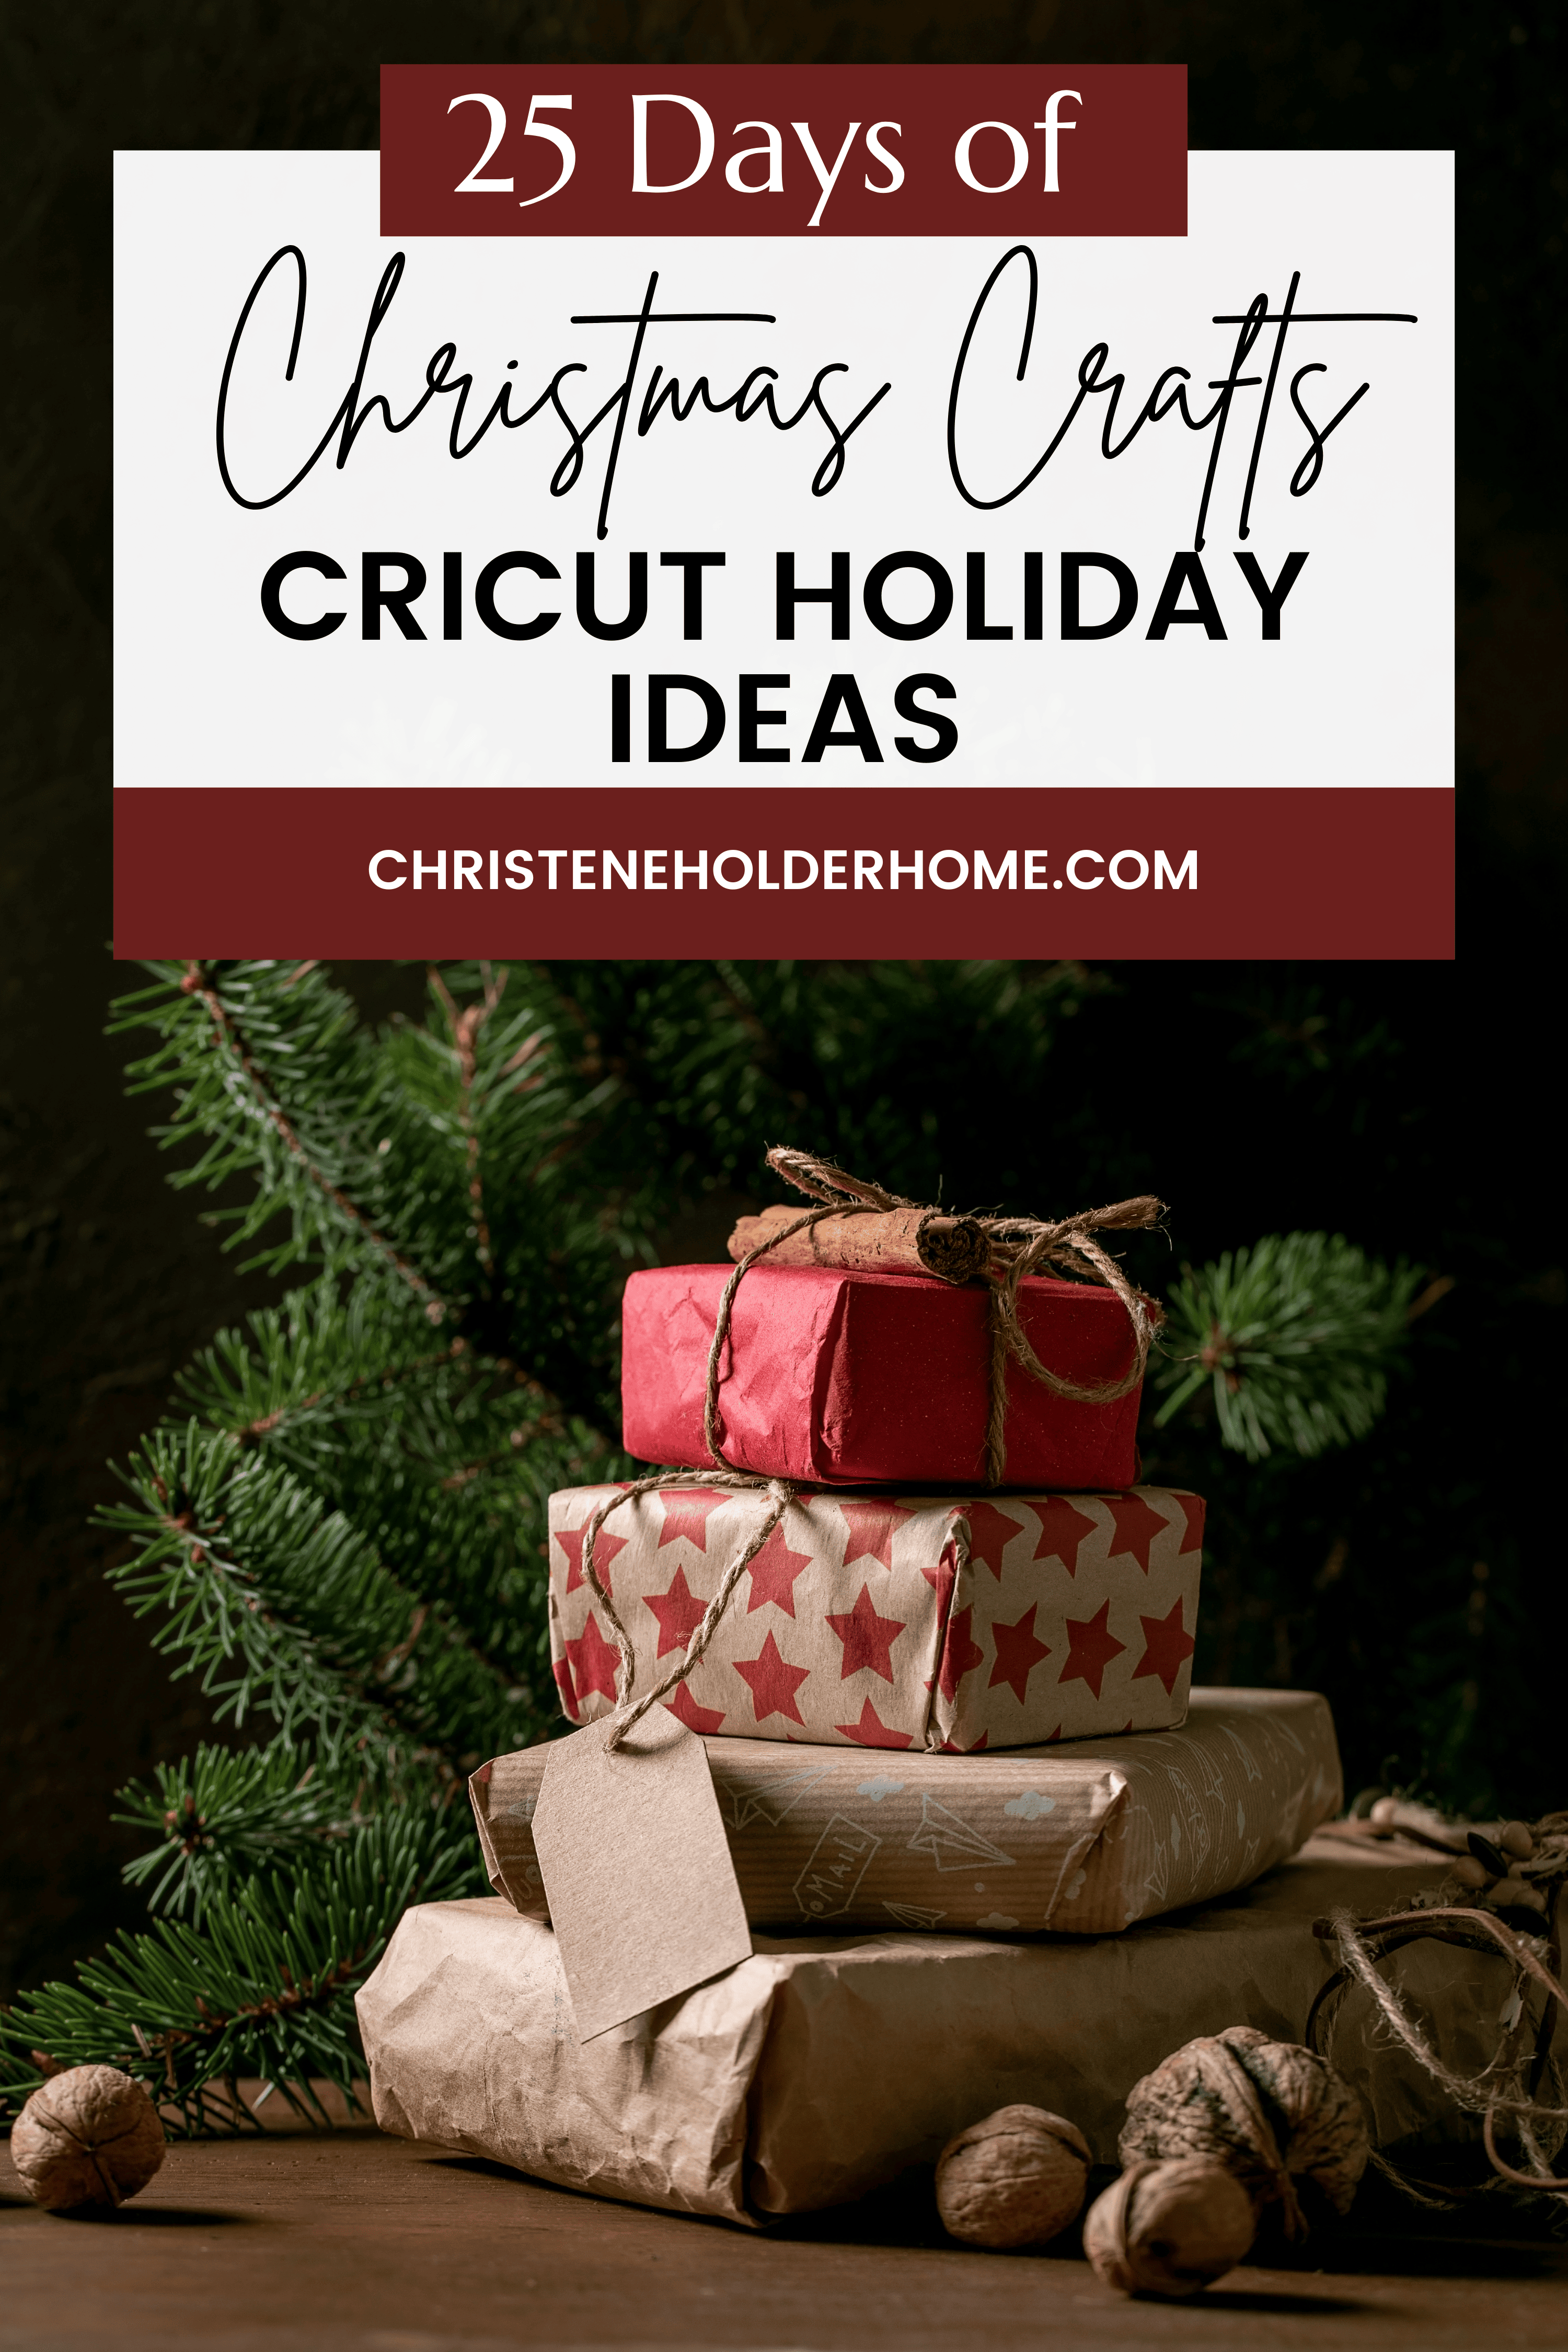 25 Days of Christmas Crafts - Cricut Holiday Ideas